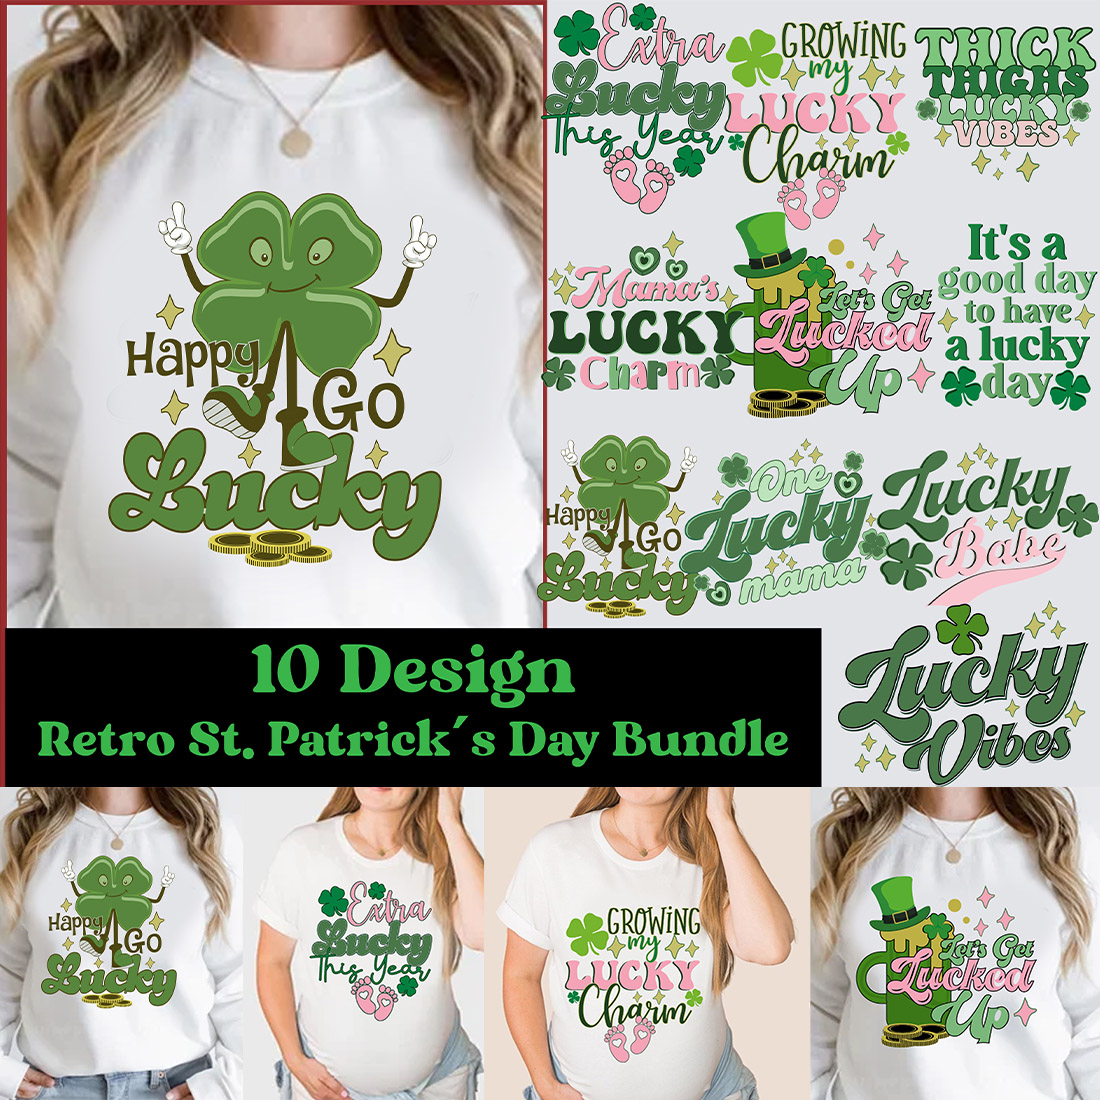 Retro Lucky St. Patrick's Day T-shirt Design Bundle cover image.